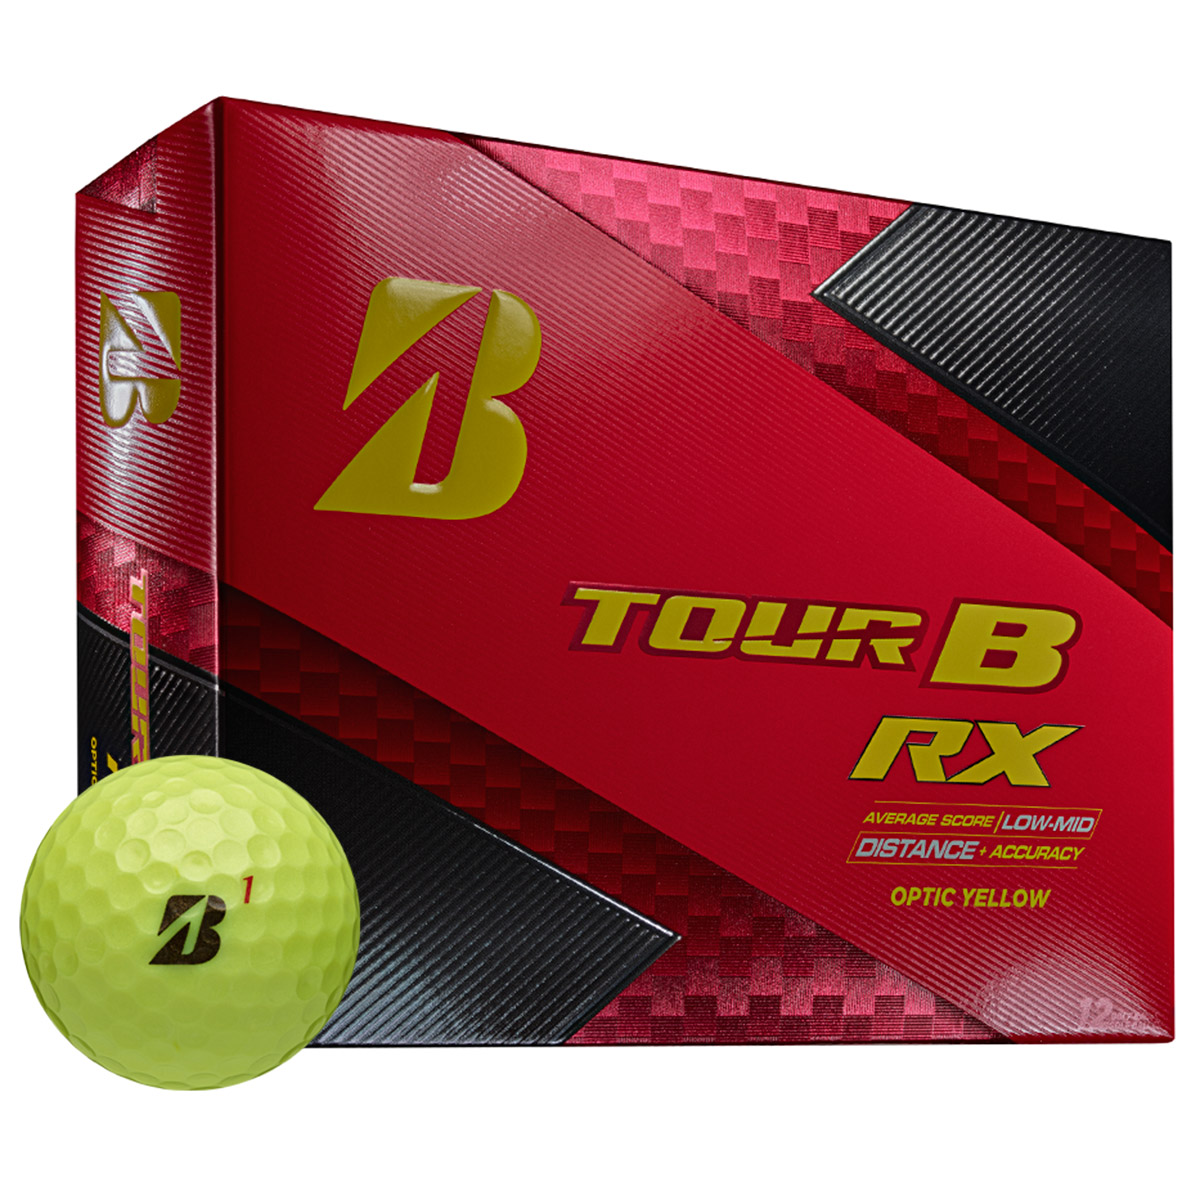 Bridgestone Golf Tour B RX 12 Ball Pack from american golf